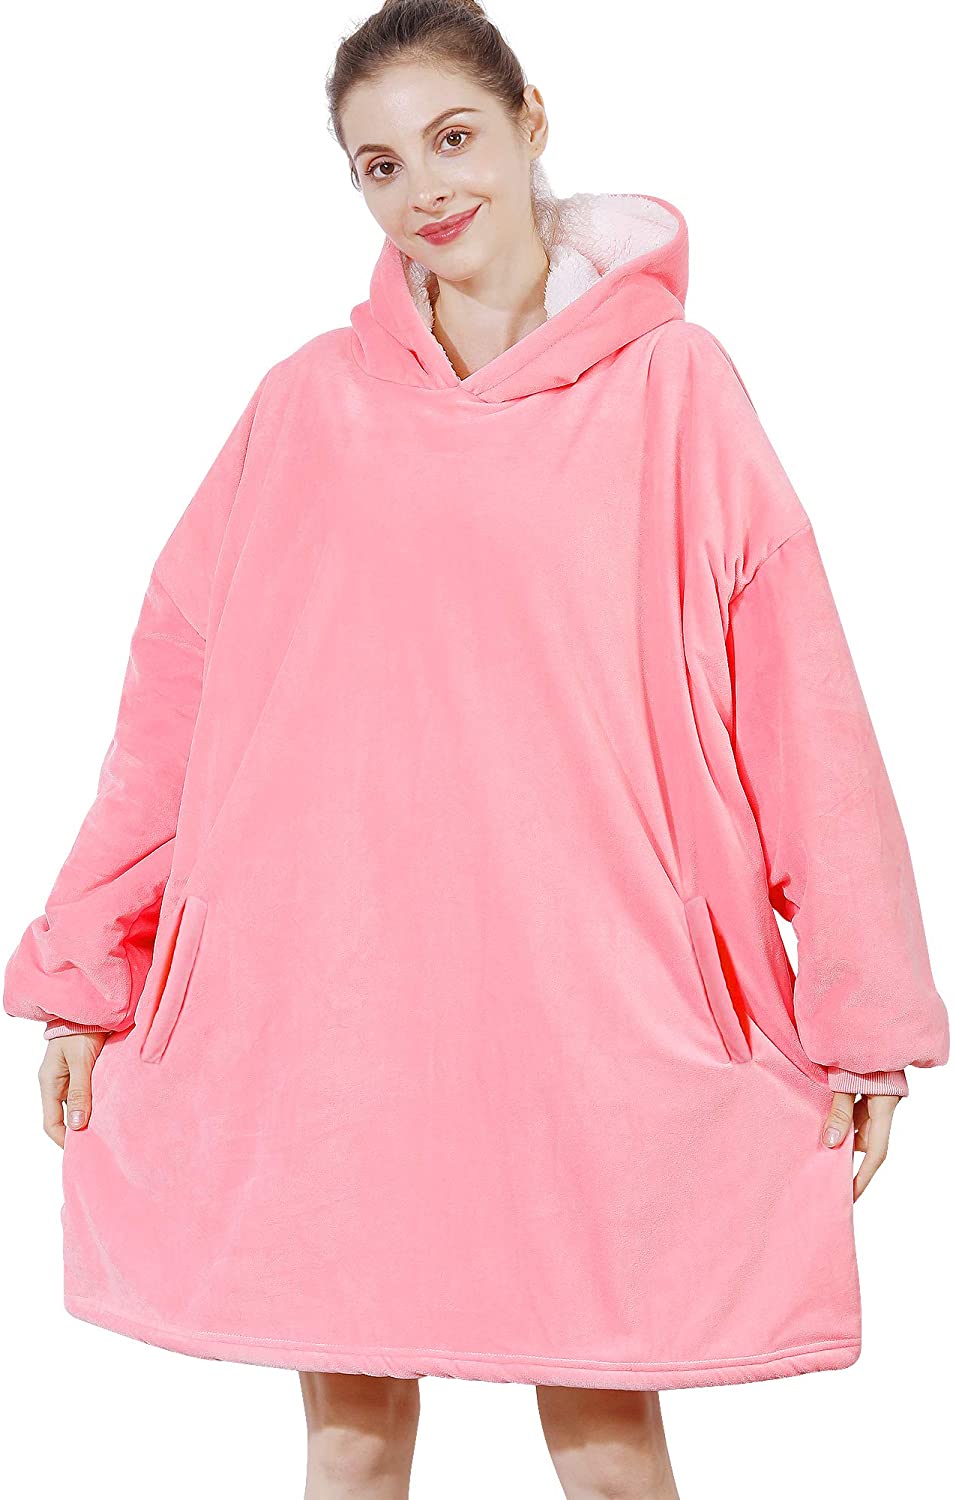 AmyHomie Microplush Shrink-Resistant Sweatshirt Blanket